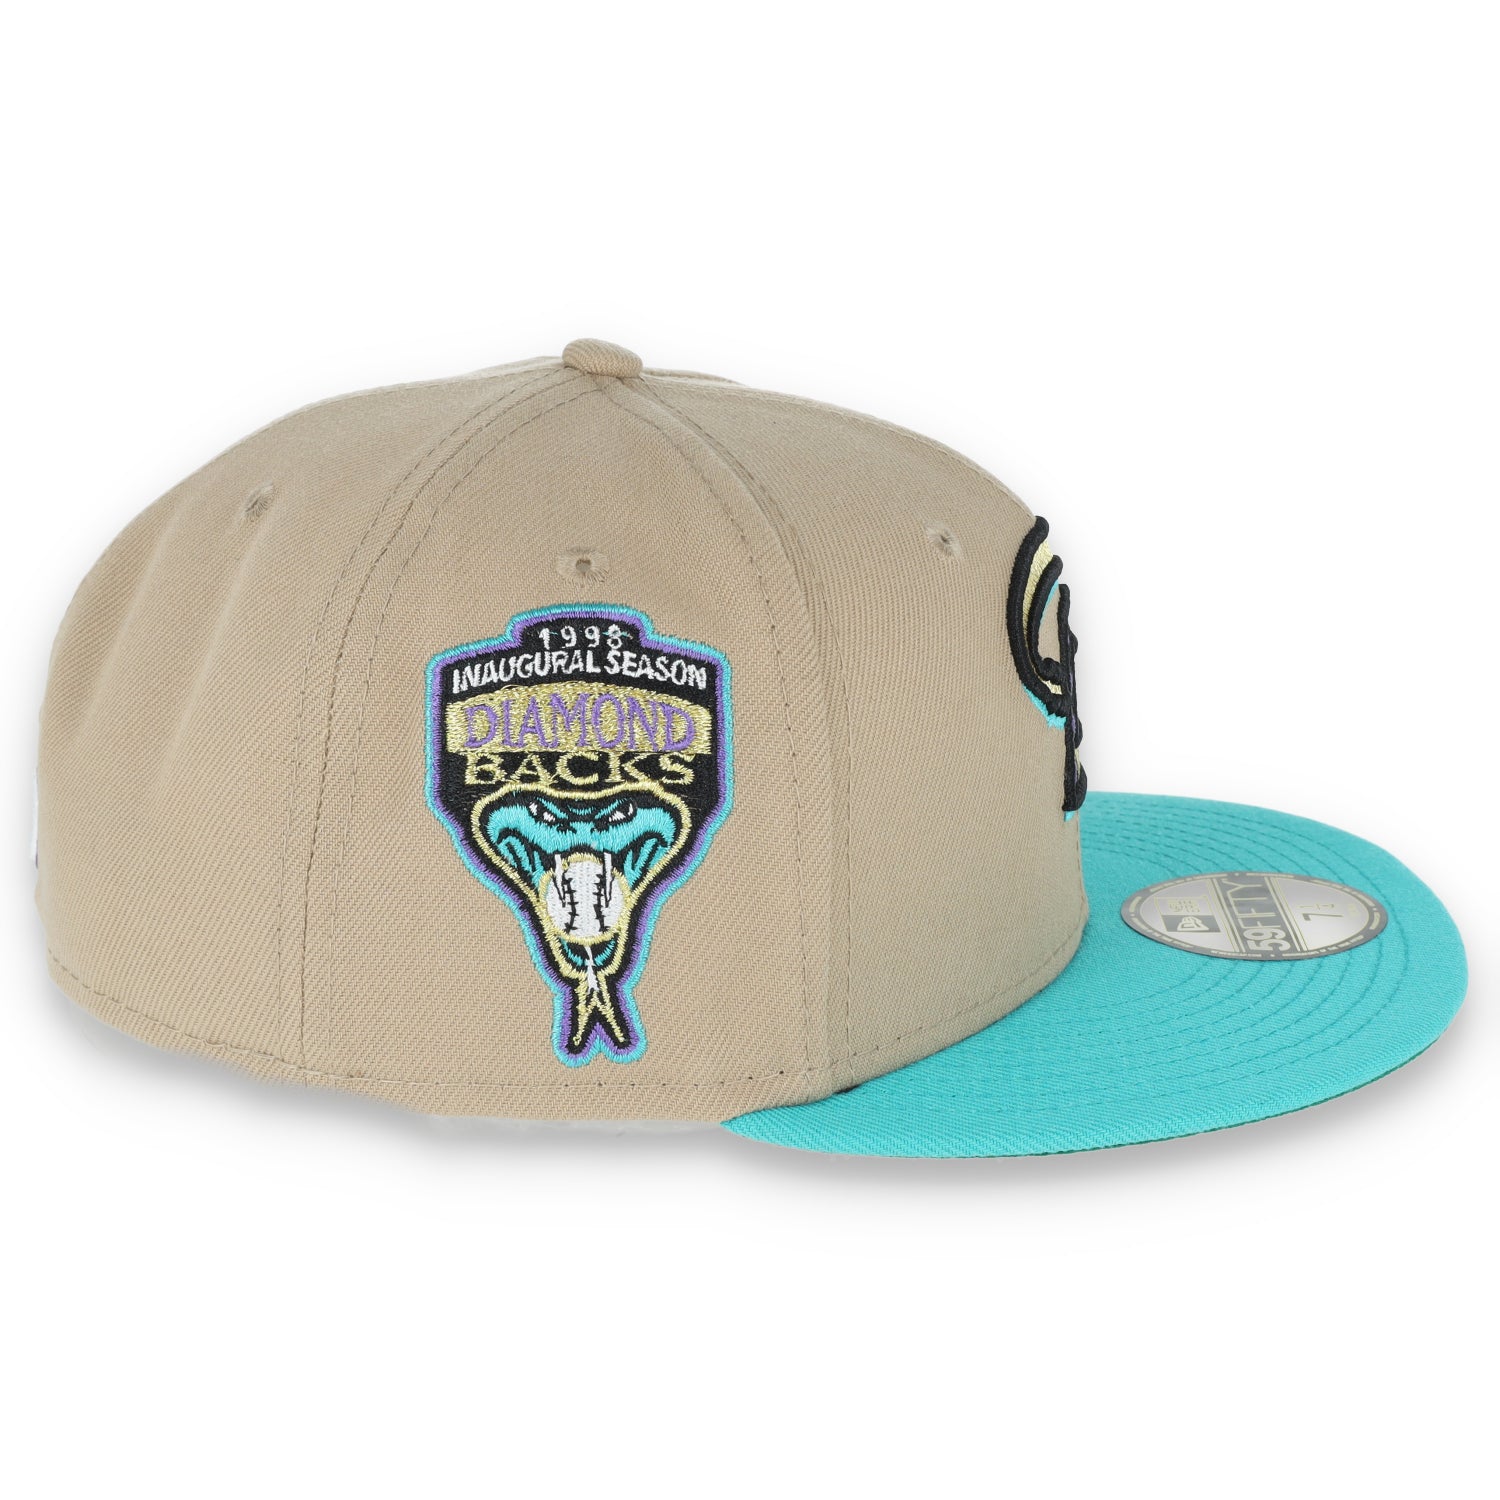 New Era Arizona Diamondbacks 1998 Inaugural Season Patch 59FIFTY Fitted Khaki Hat